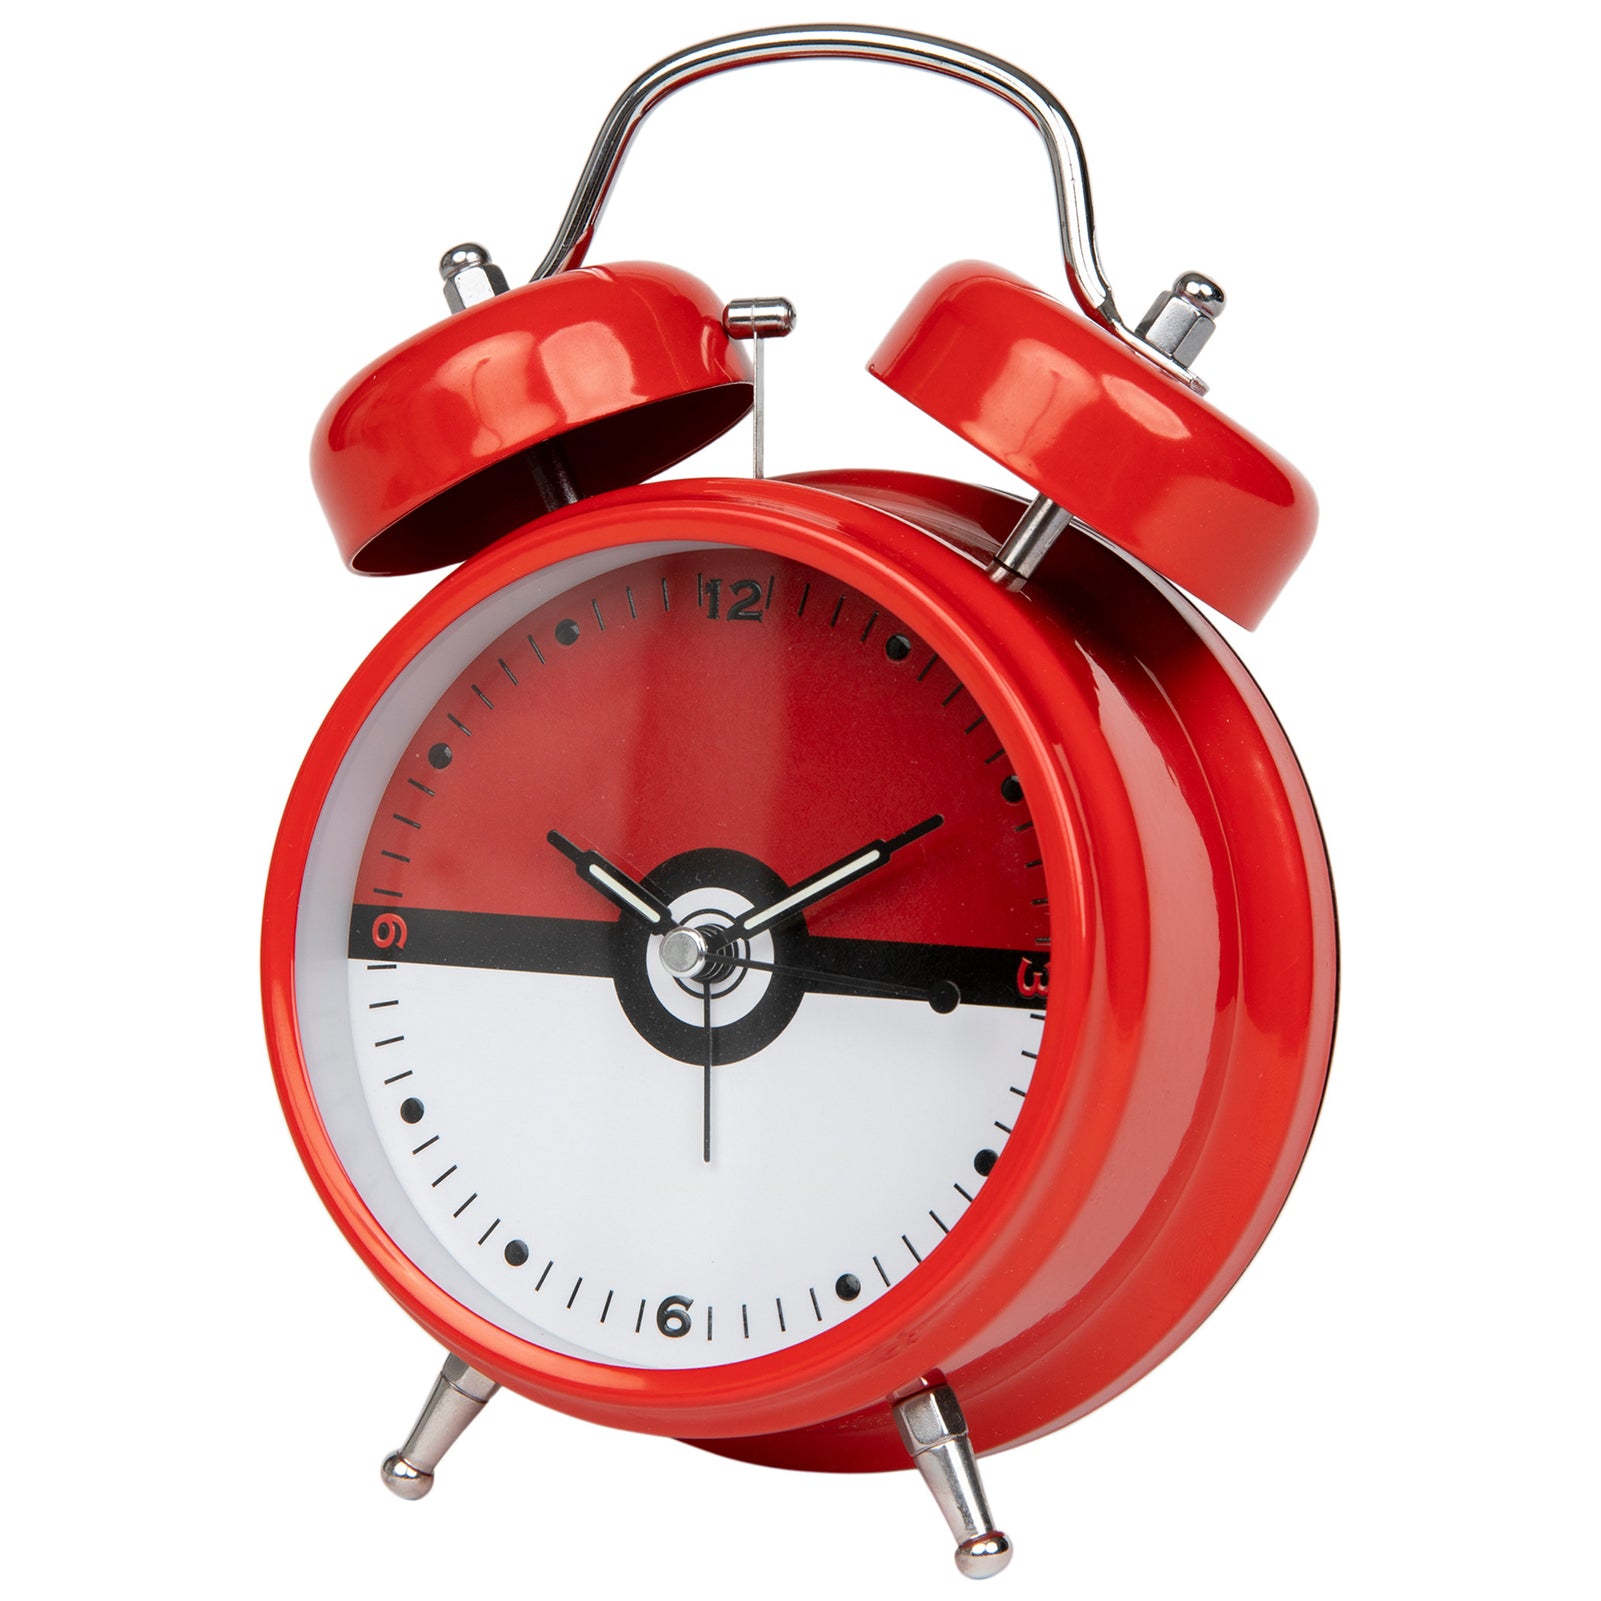 Pokemon Pokeball Alarm Clock